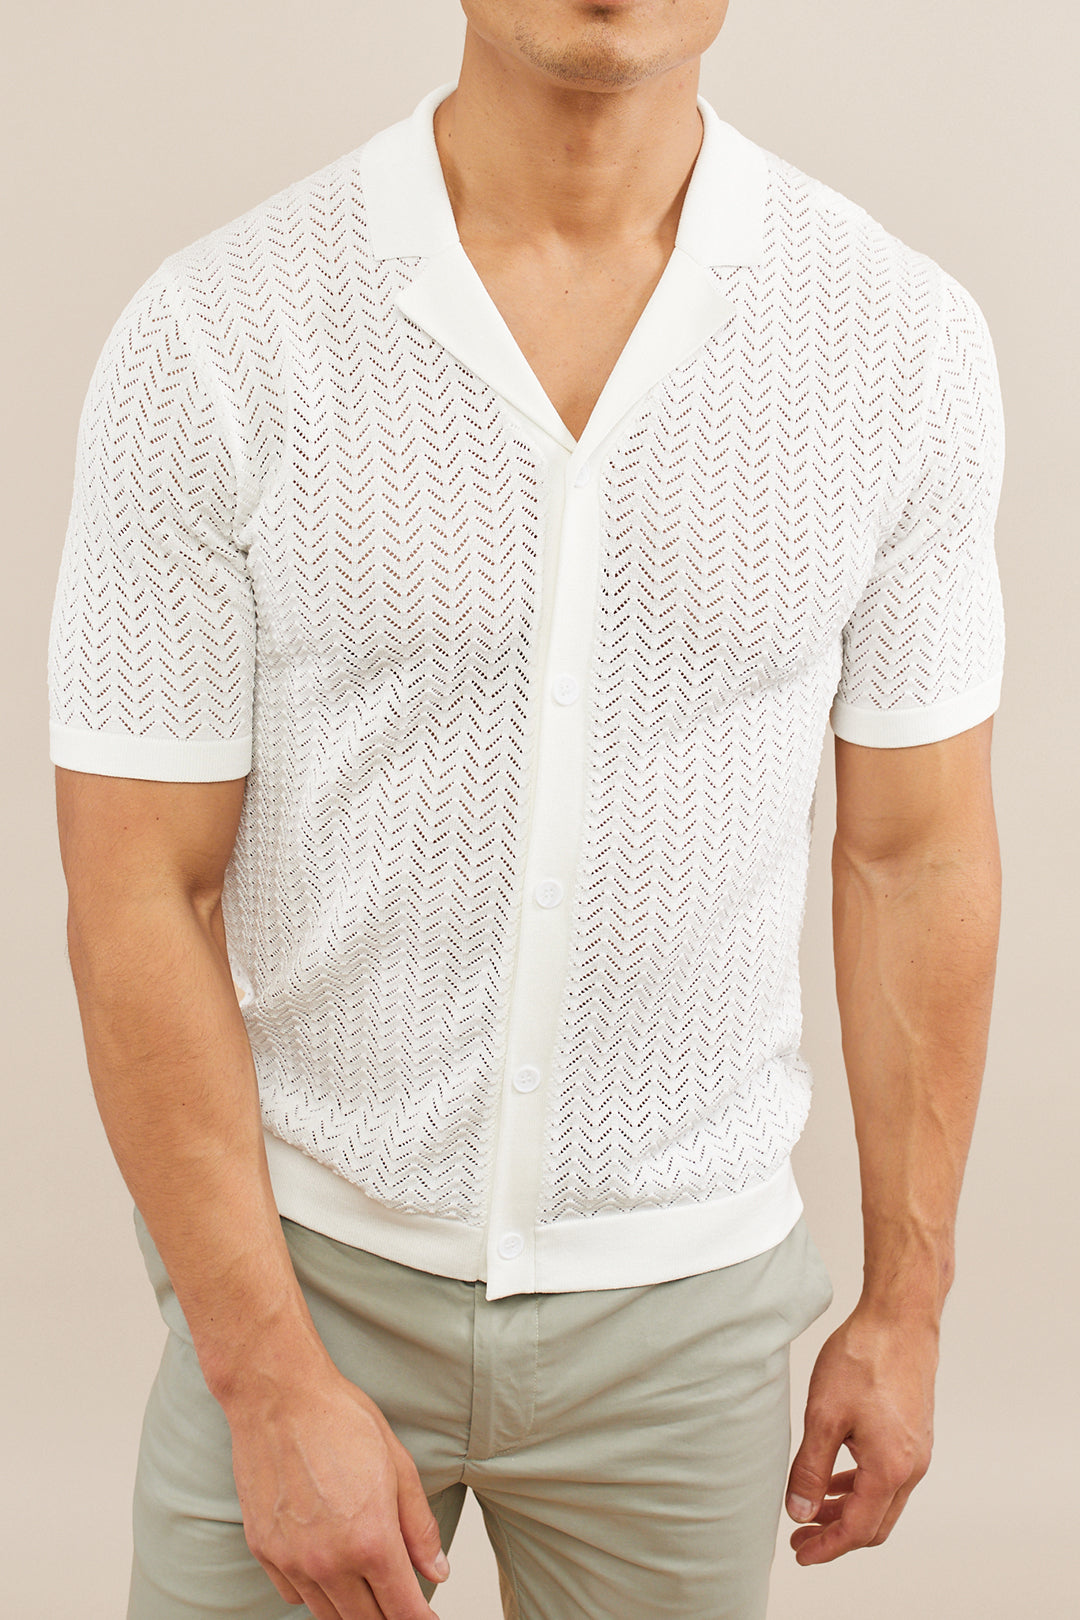 Torre Crochet Button Down Shirt - White